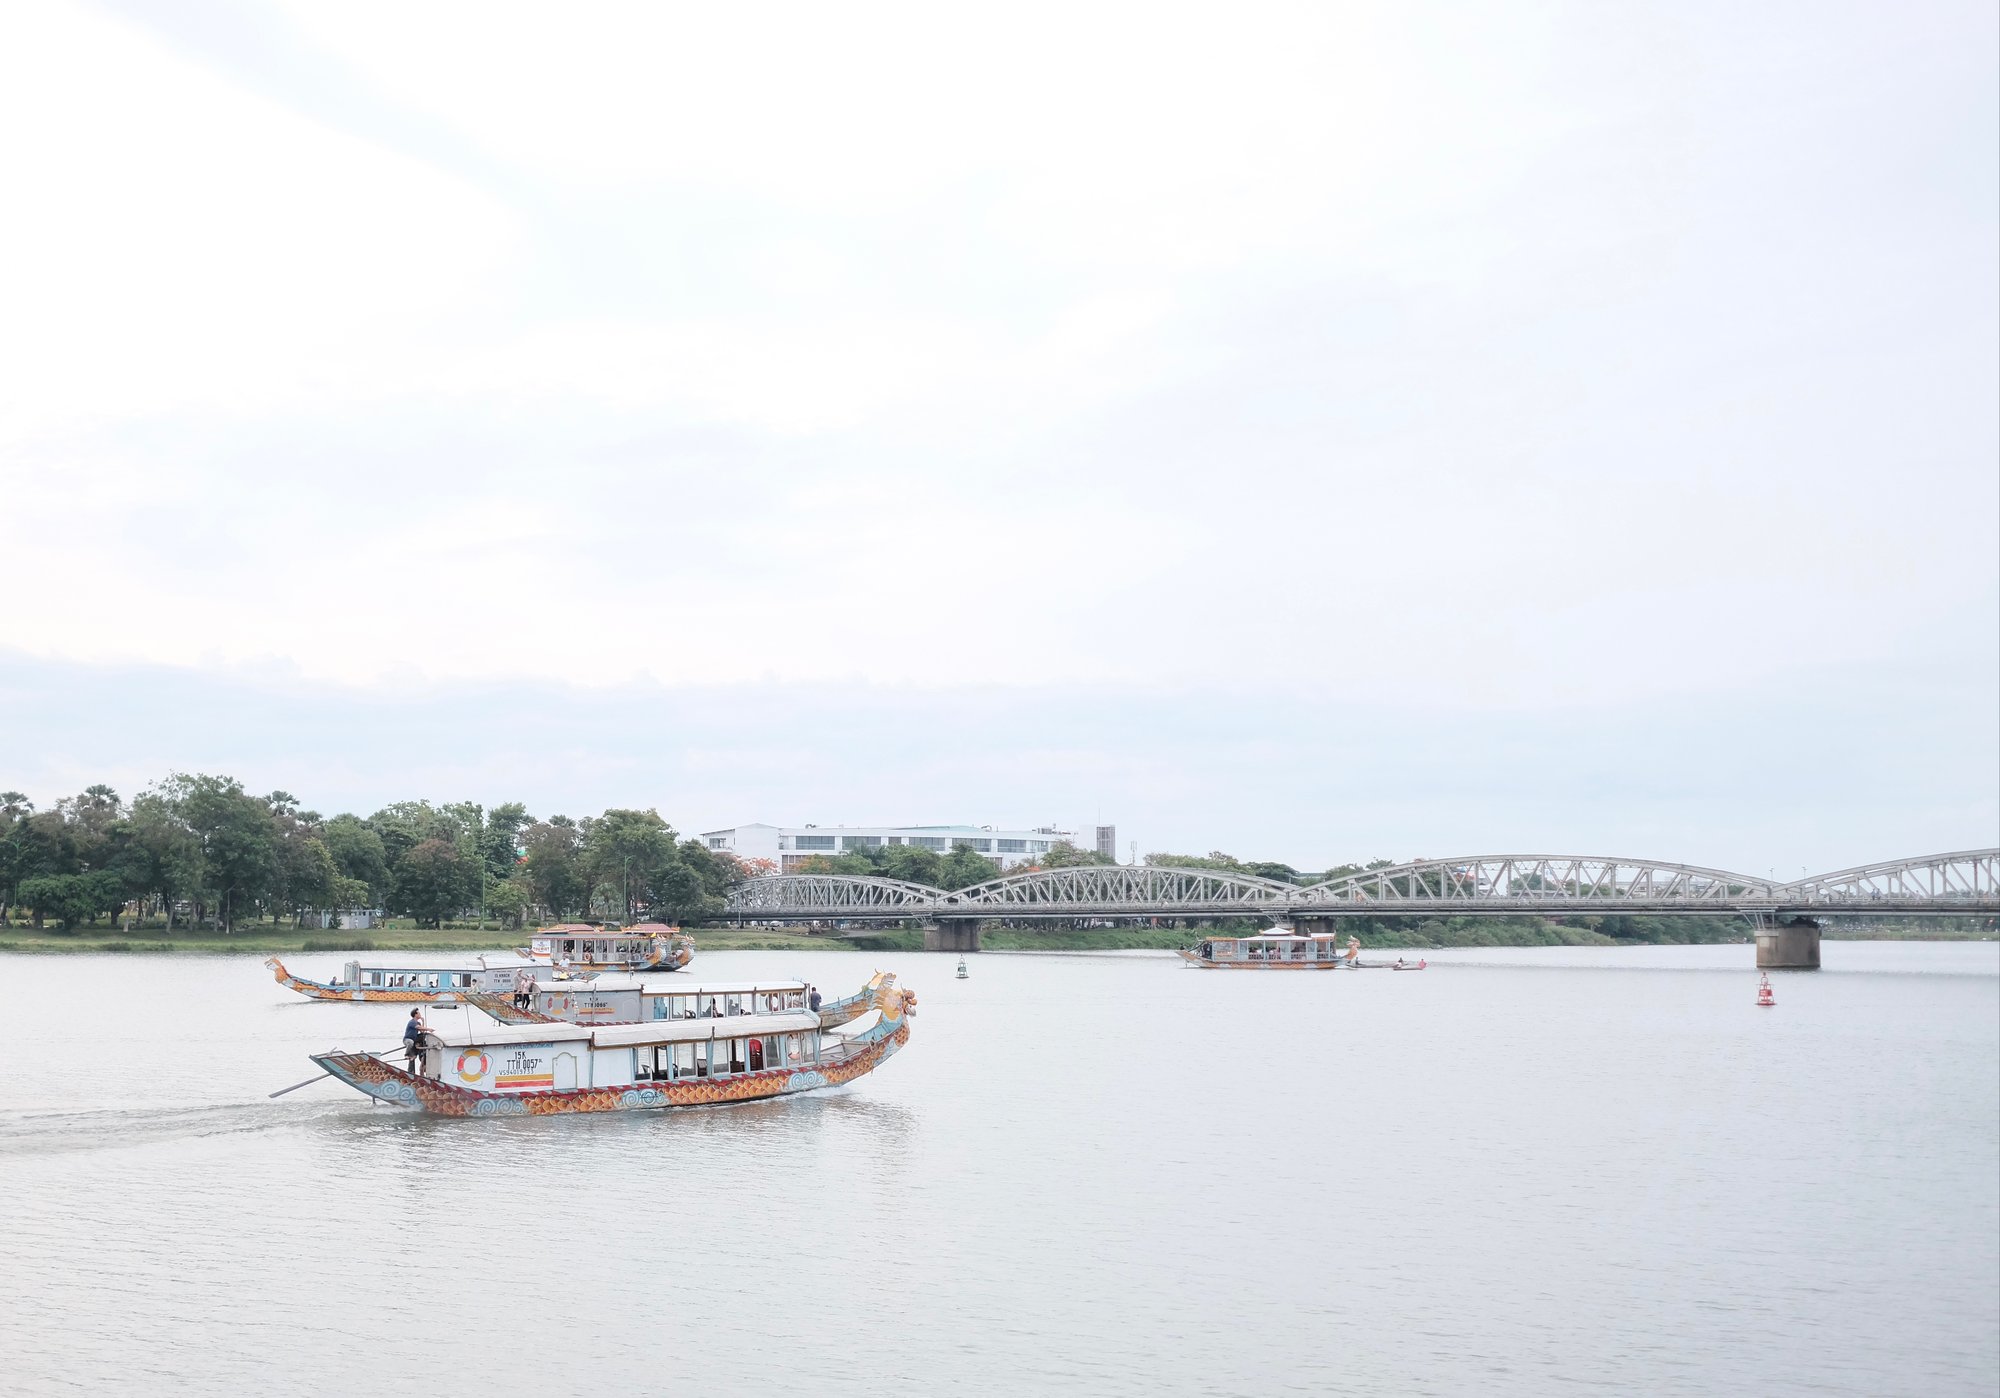 Huong River - Hue